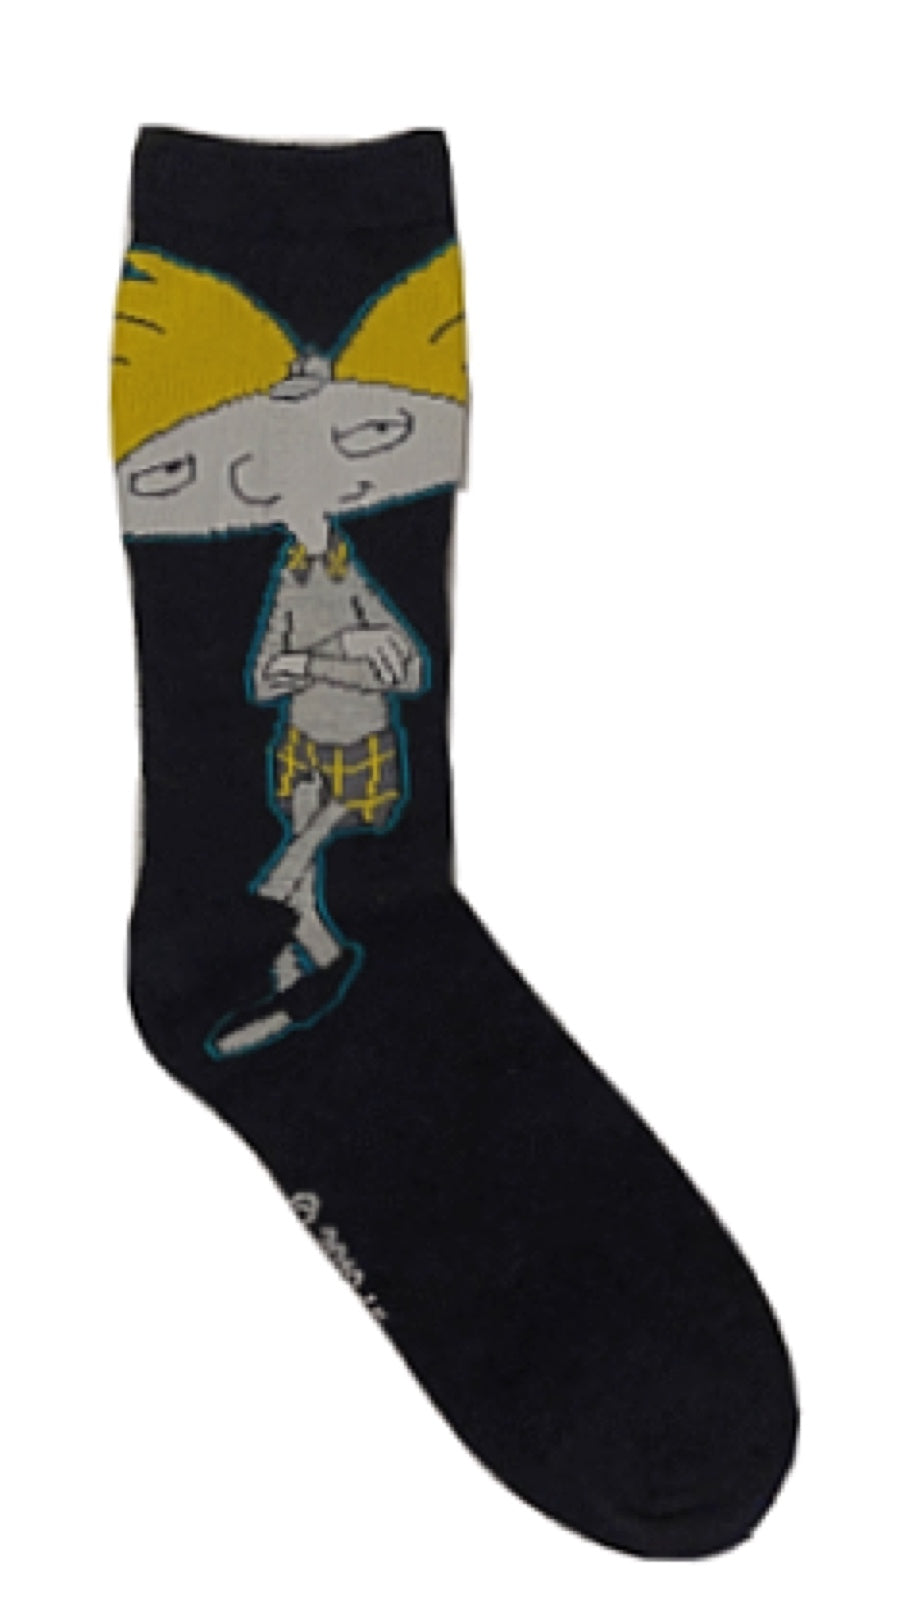 HEY ARNOLD Men's Socks Nickelodeon